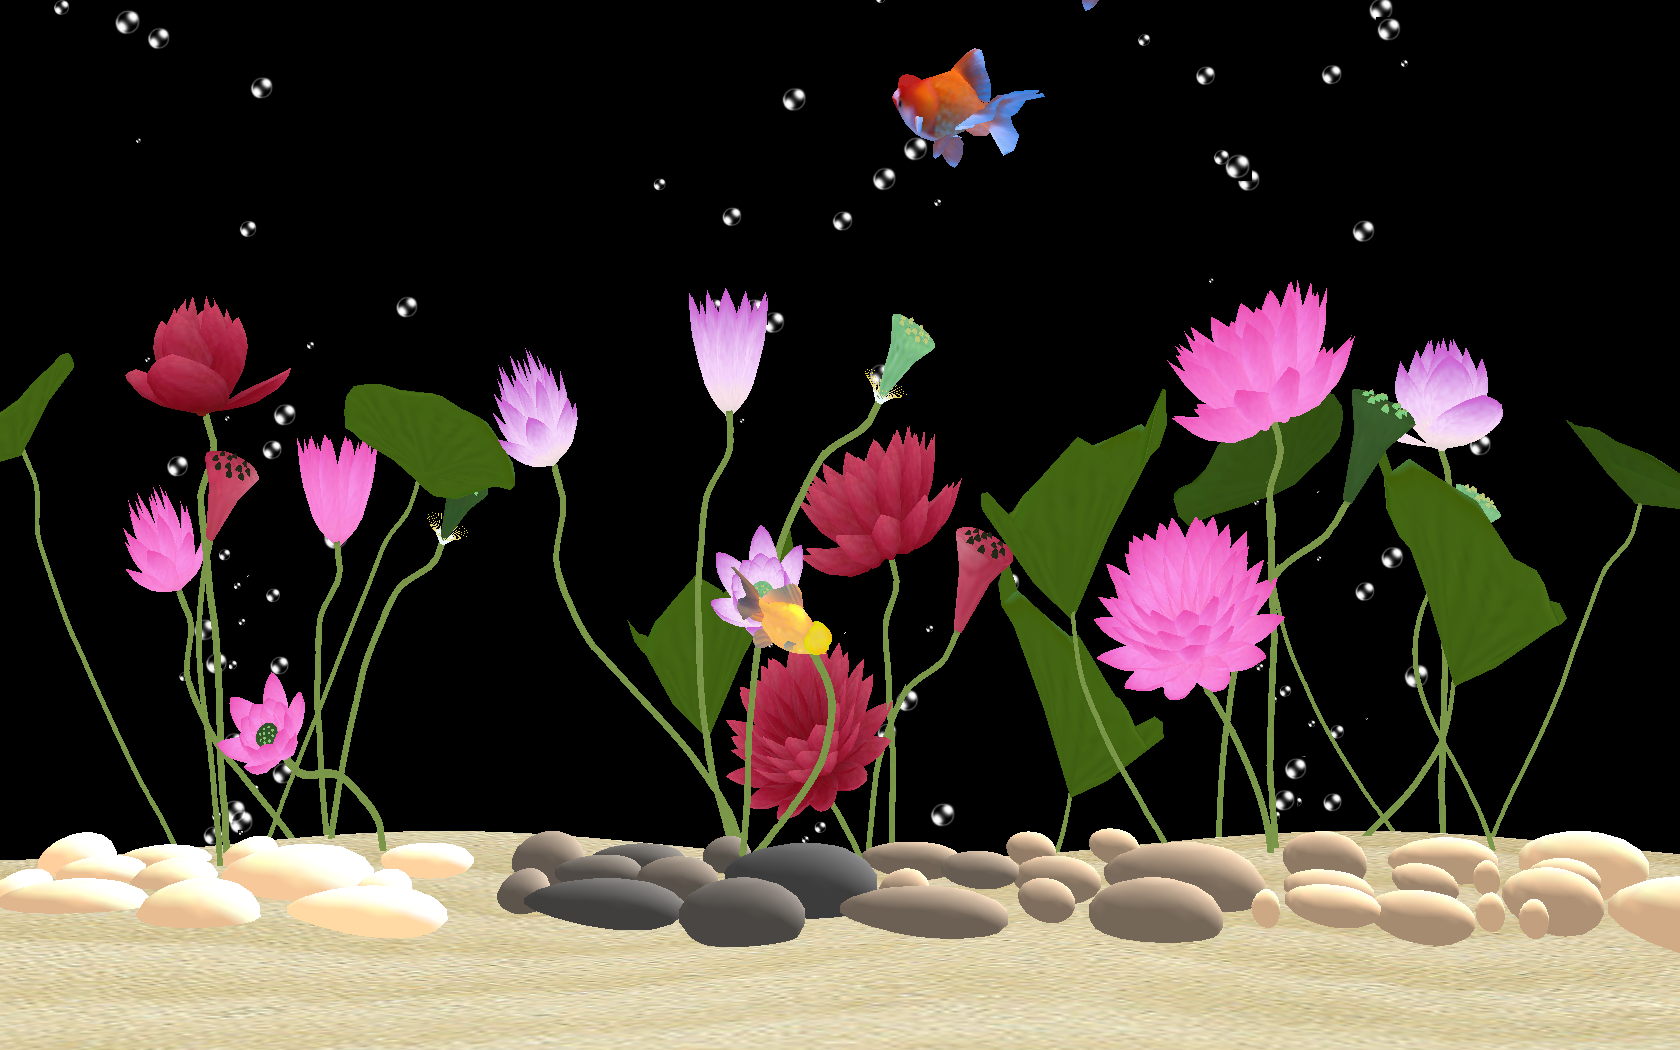 Colorful CGI goldfish swimming in a digital aquatic environment.